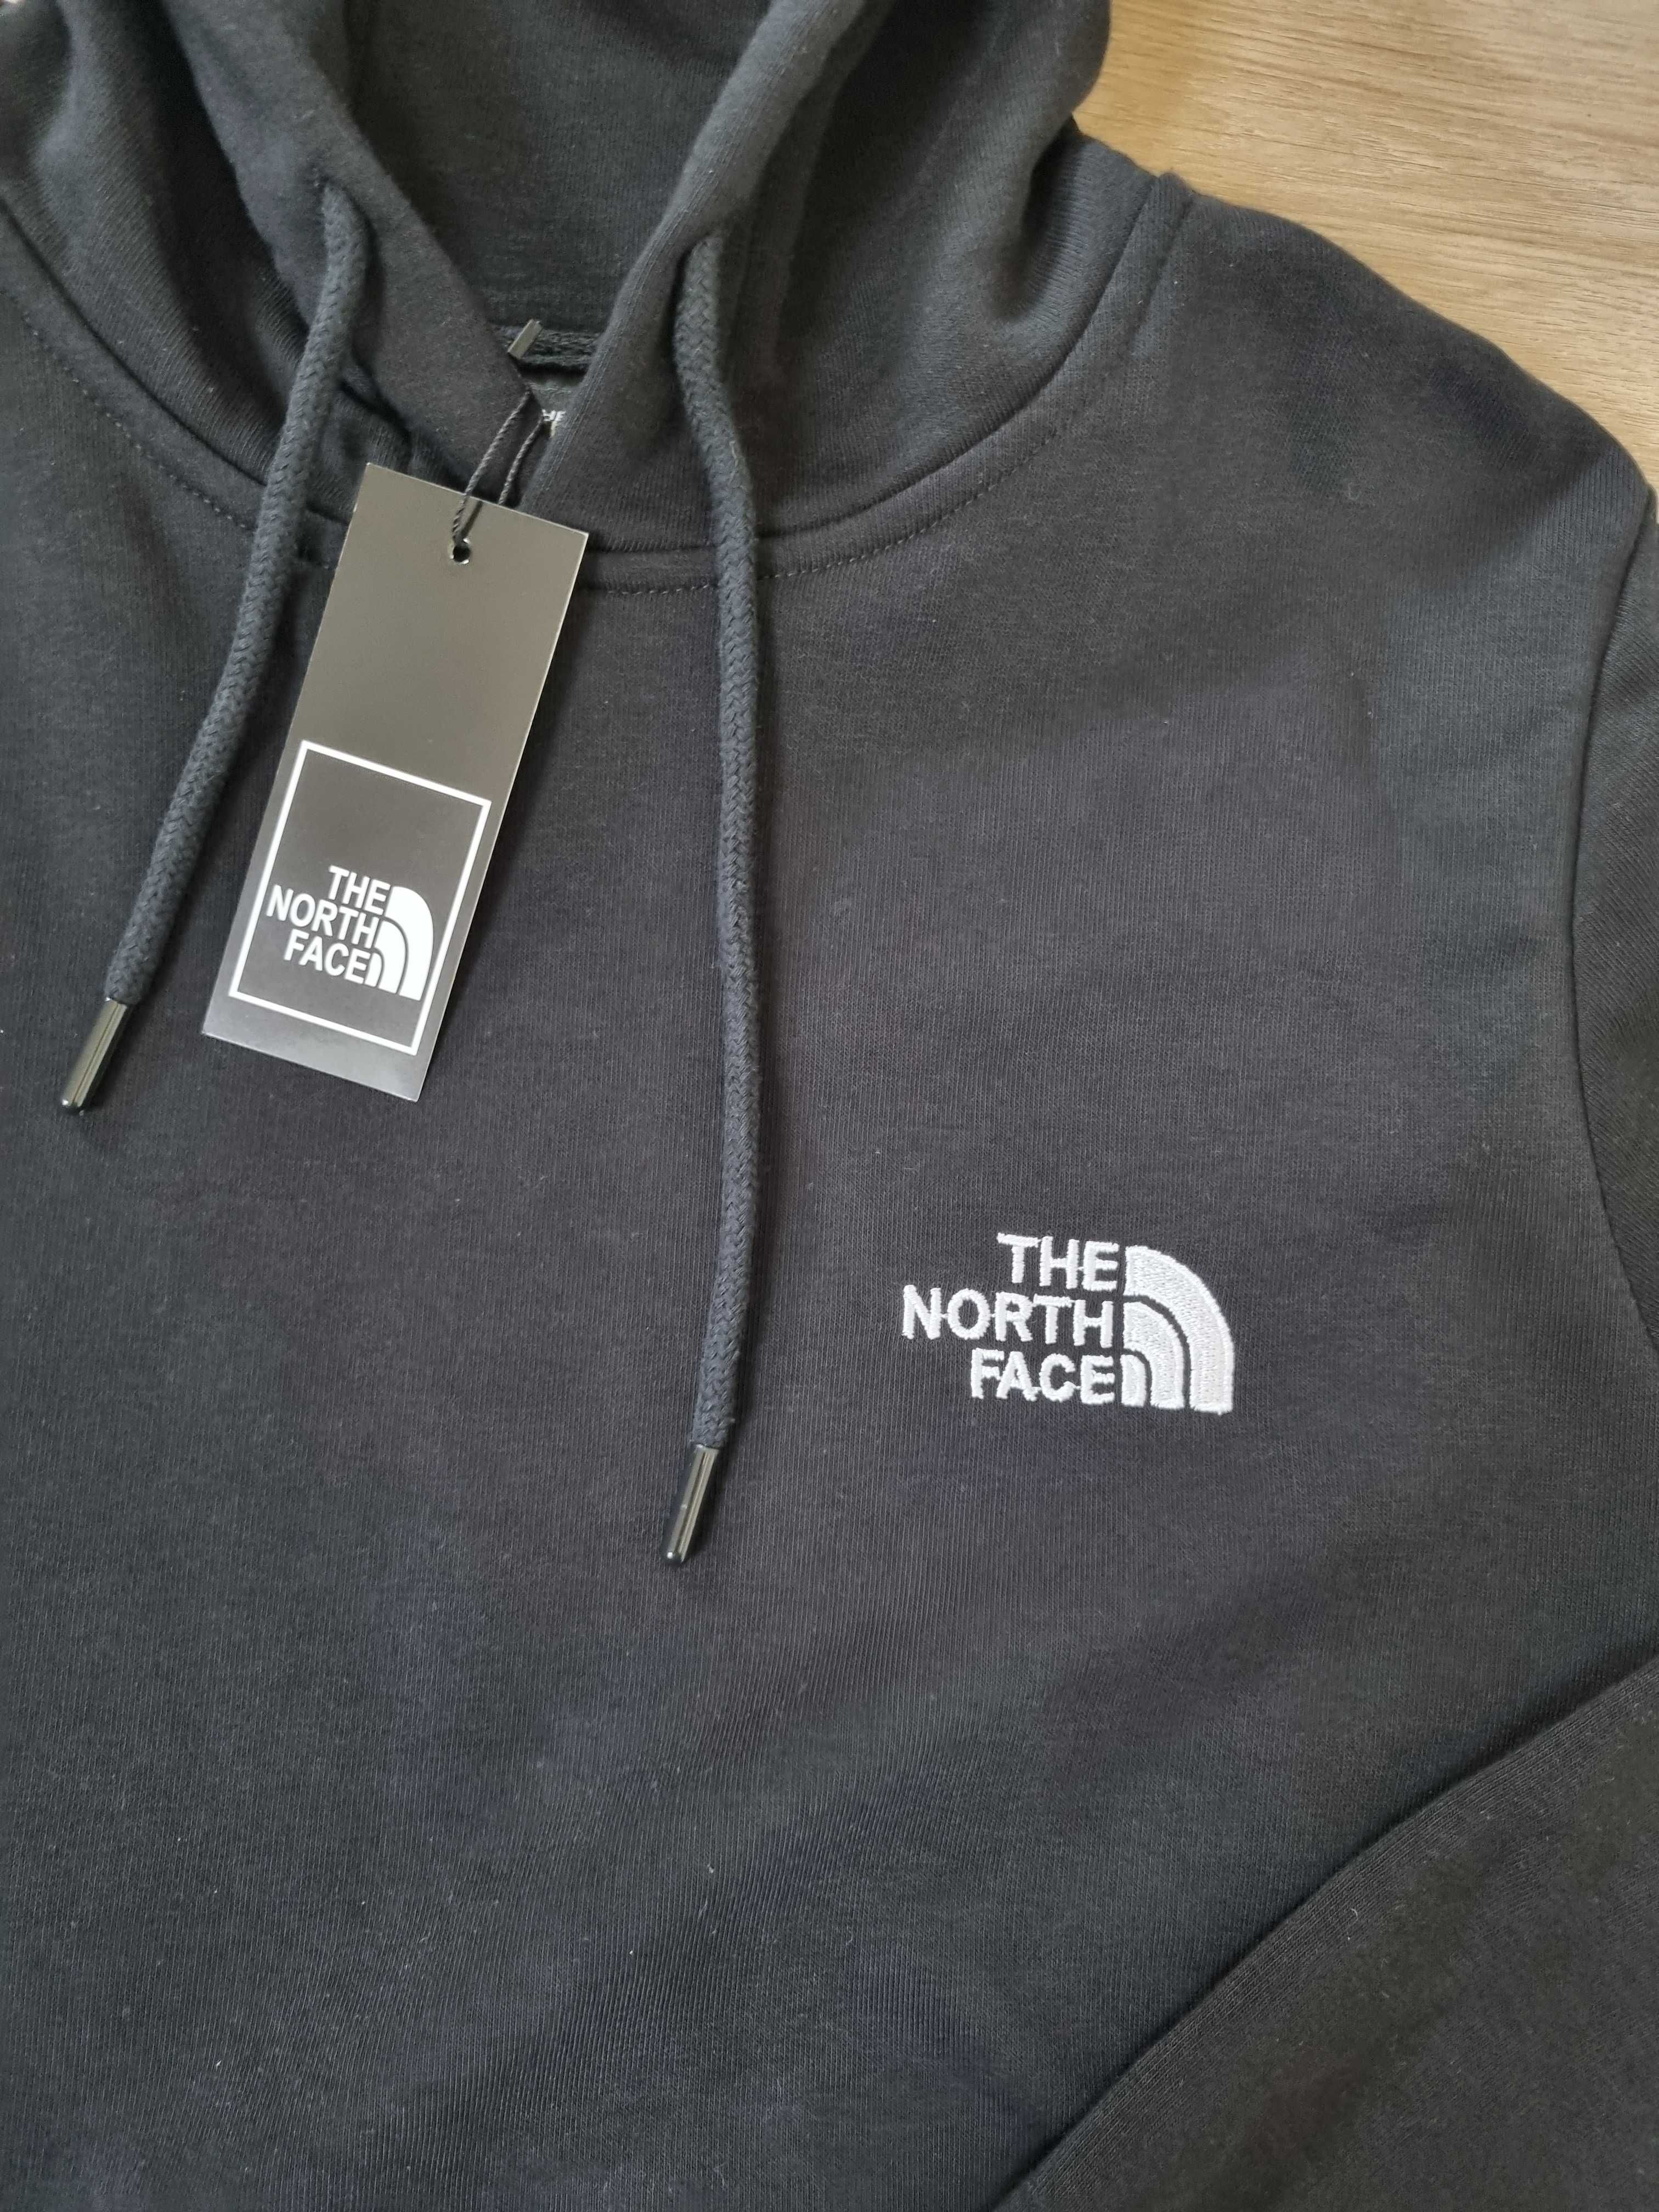 Męska bluza z kapturem TNF The North Face rozmiar S NOWA